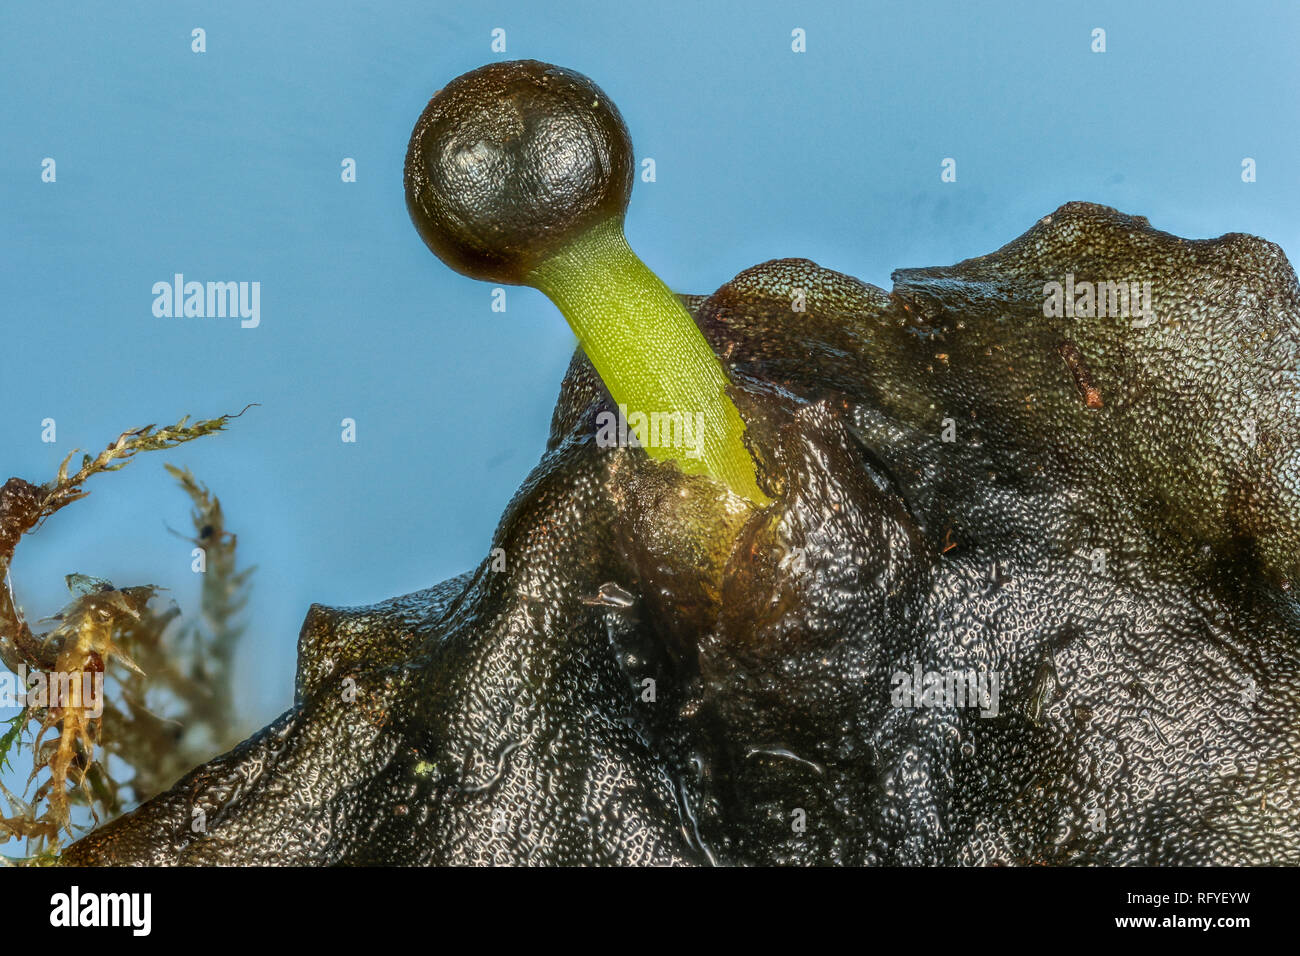 Sporangium spore structure emerging from a liverwort plant Stock Photo